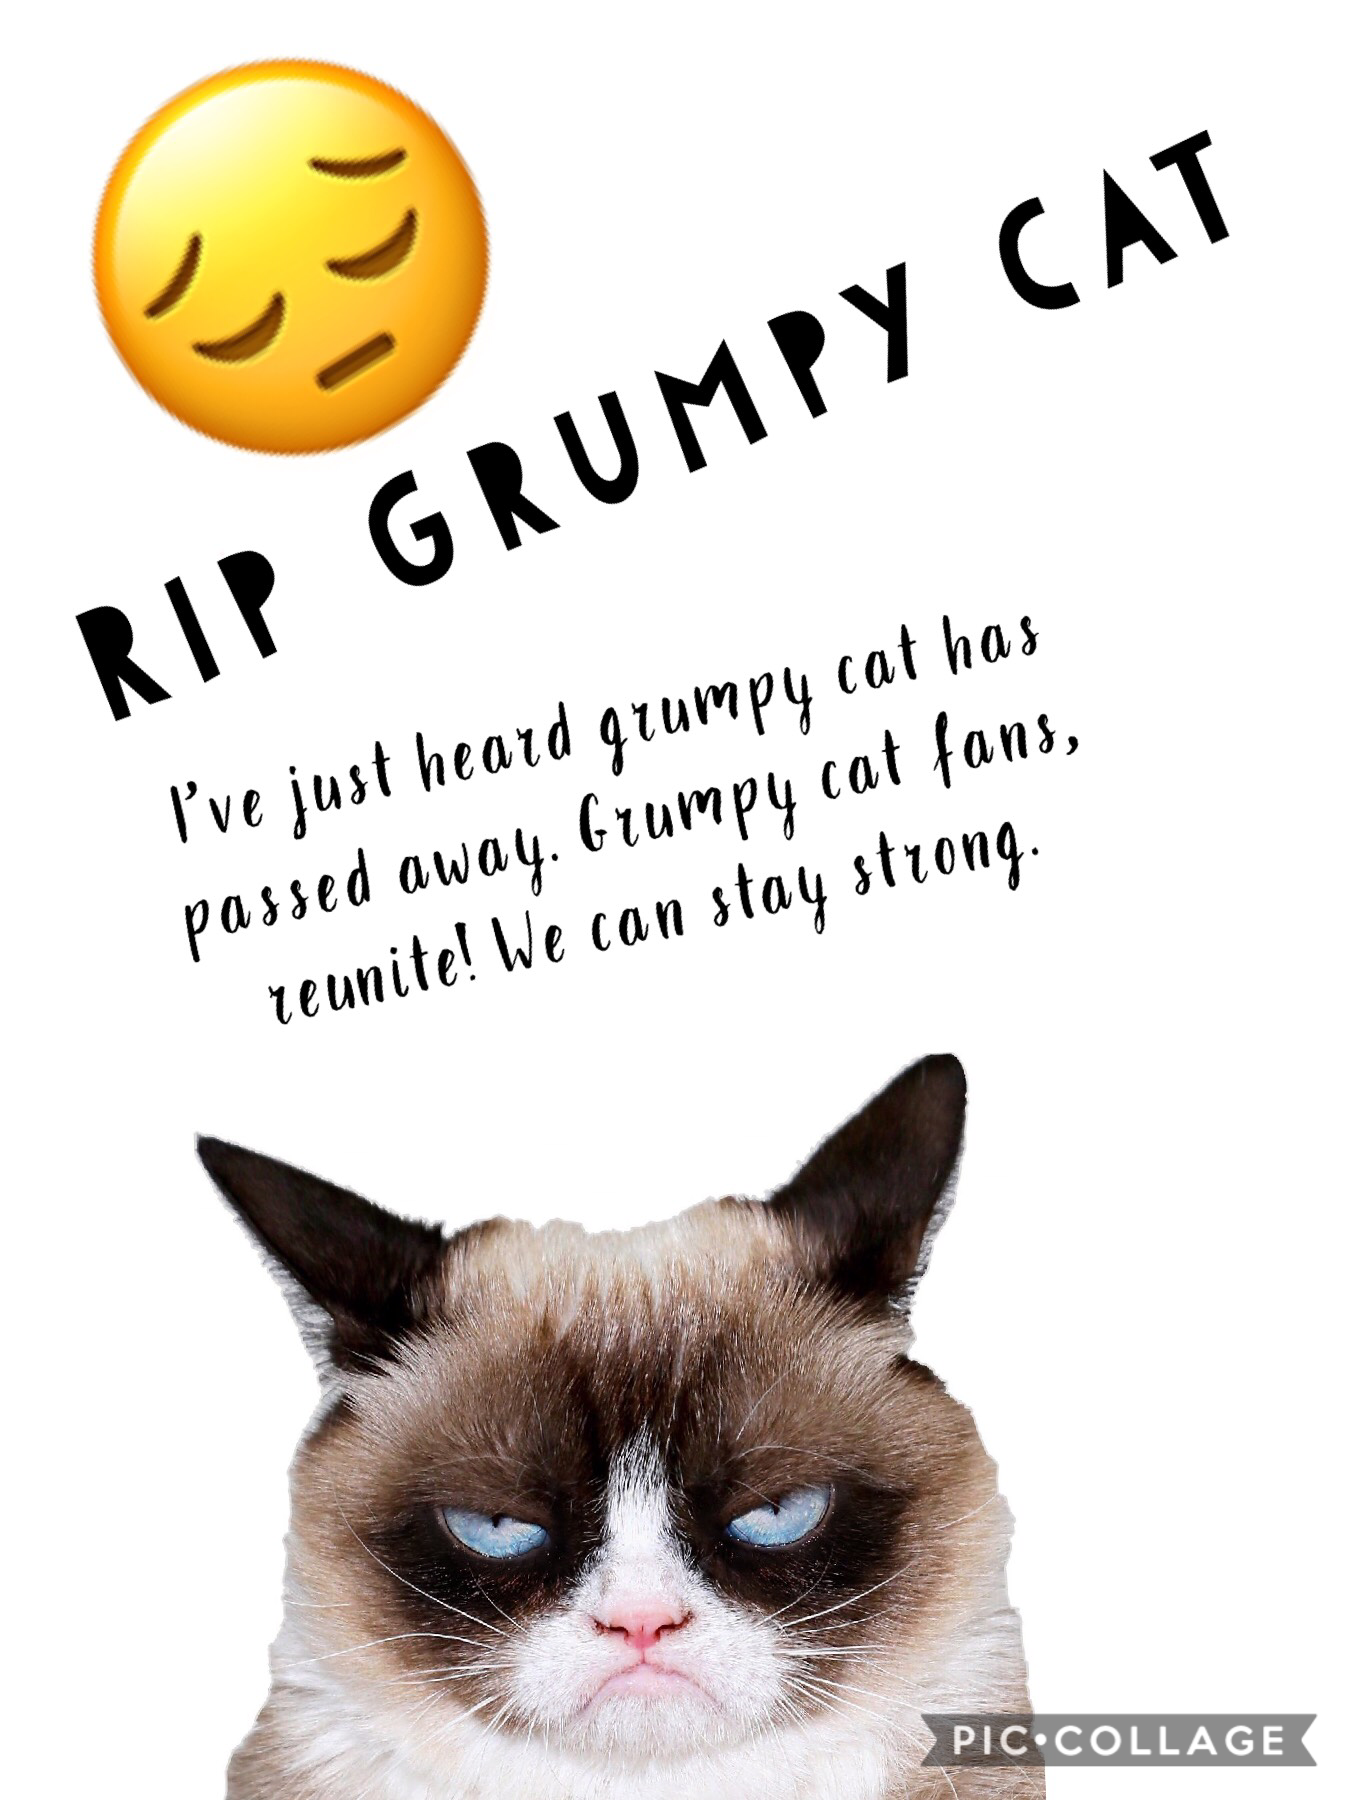 Grumpy cat, you rockkkk